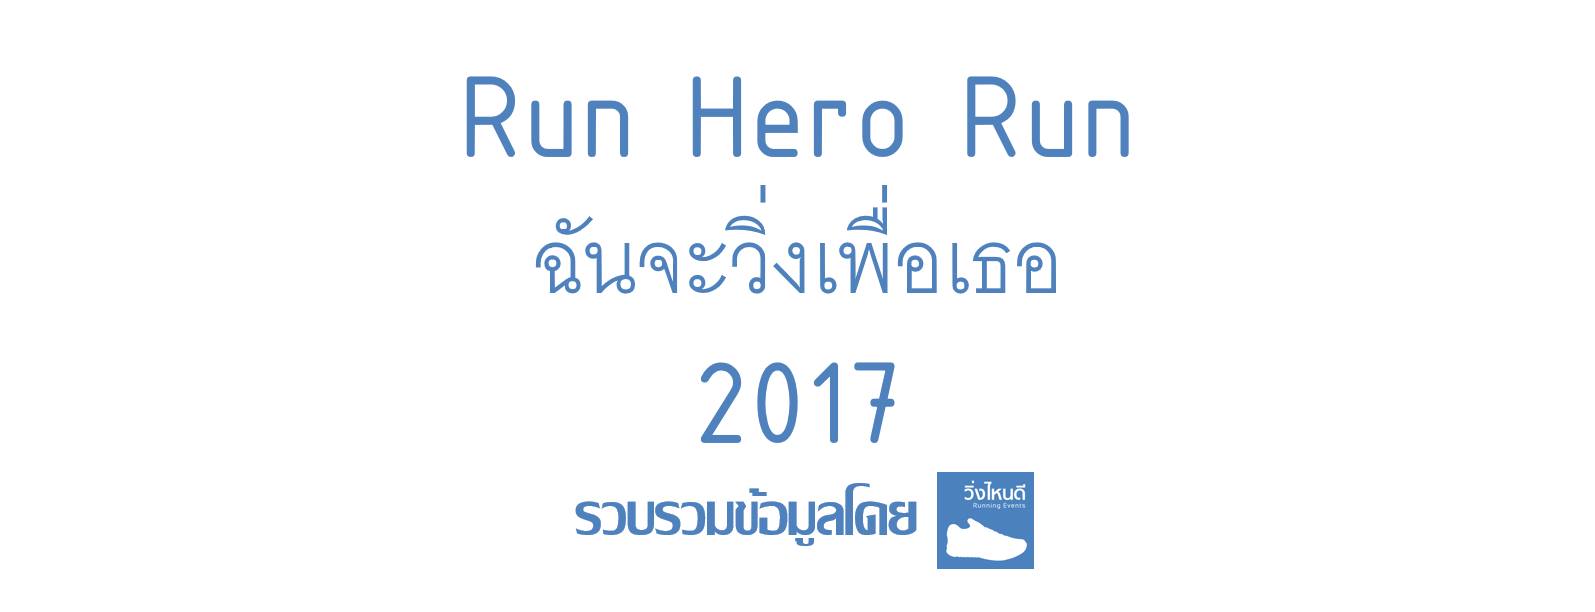 Run Hero Run ฉันจะวิ่งเพื่อเธอ 2017